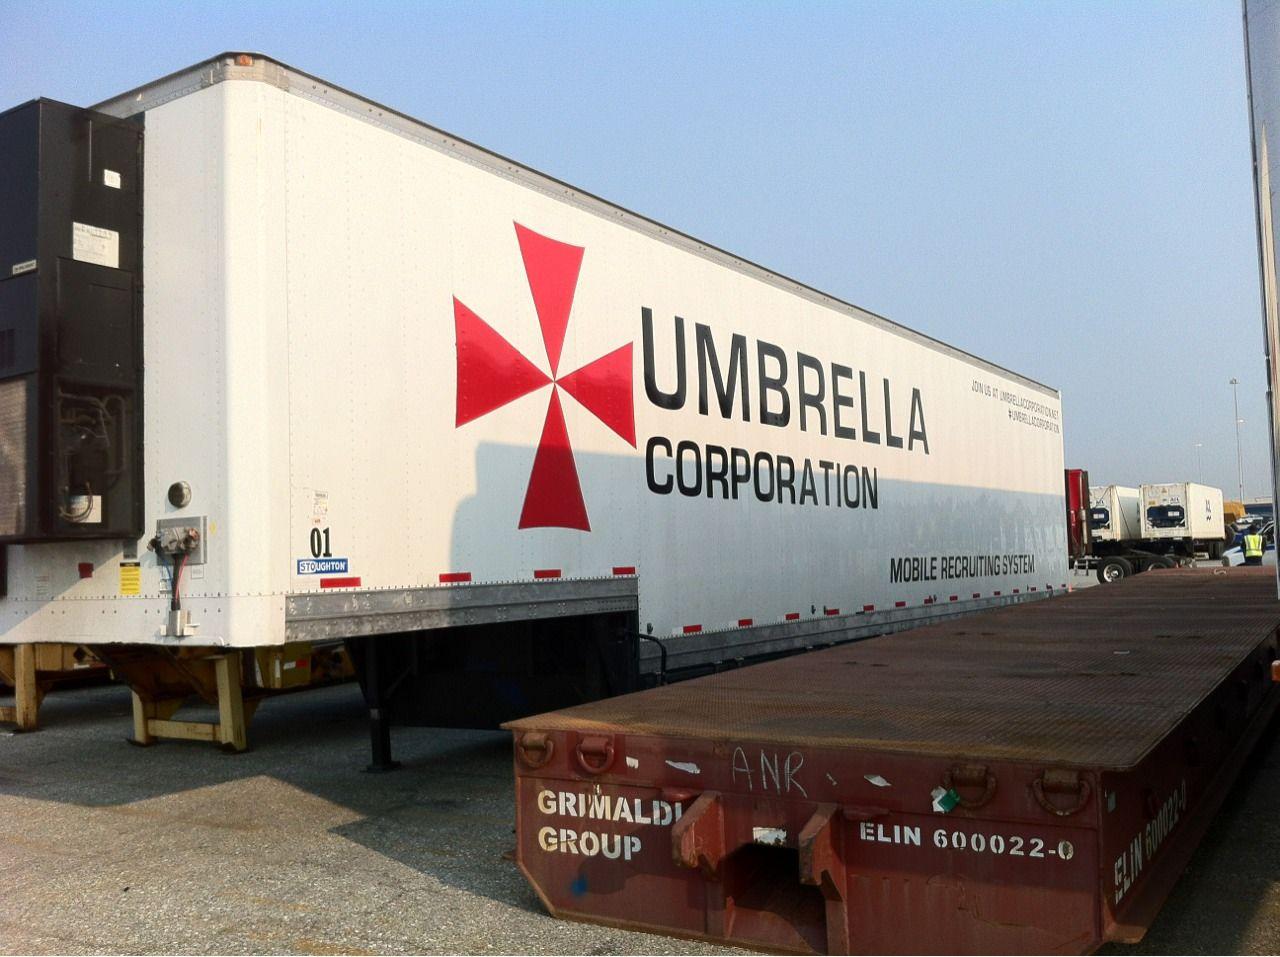 Real Life Umbrella Corporation Logo - Umbrella Corp Truck. Seems Legit. Don't let them take over